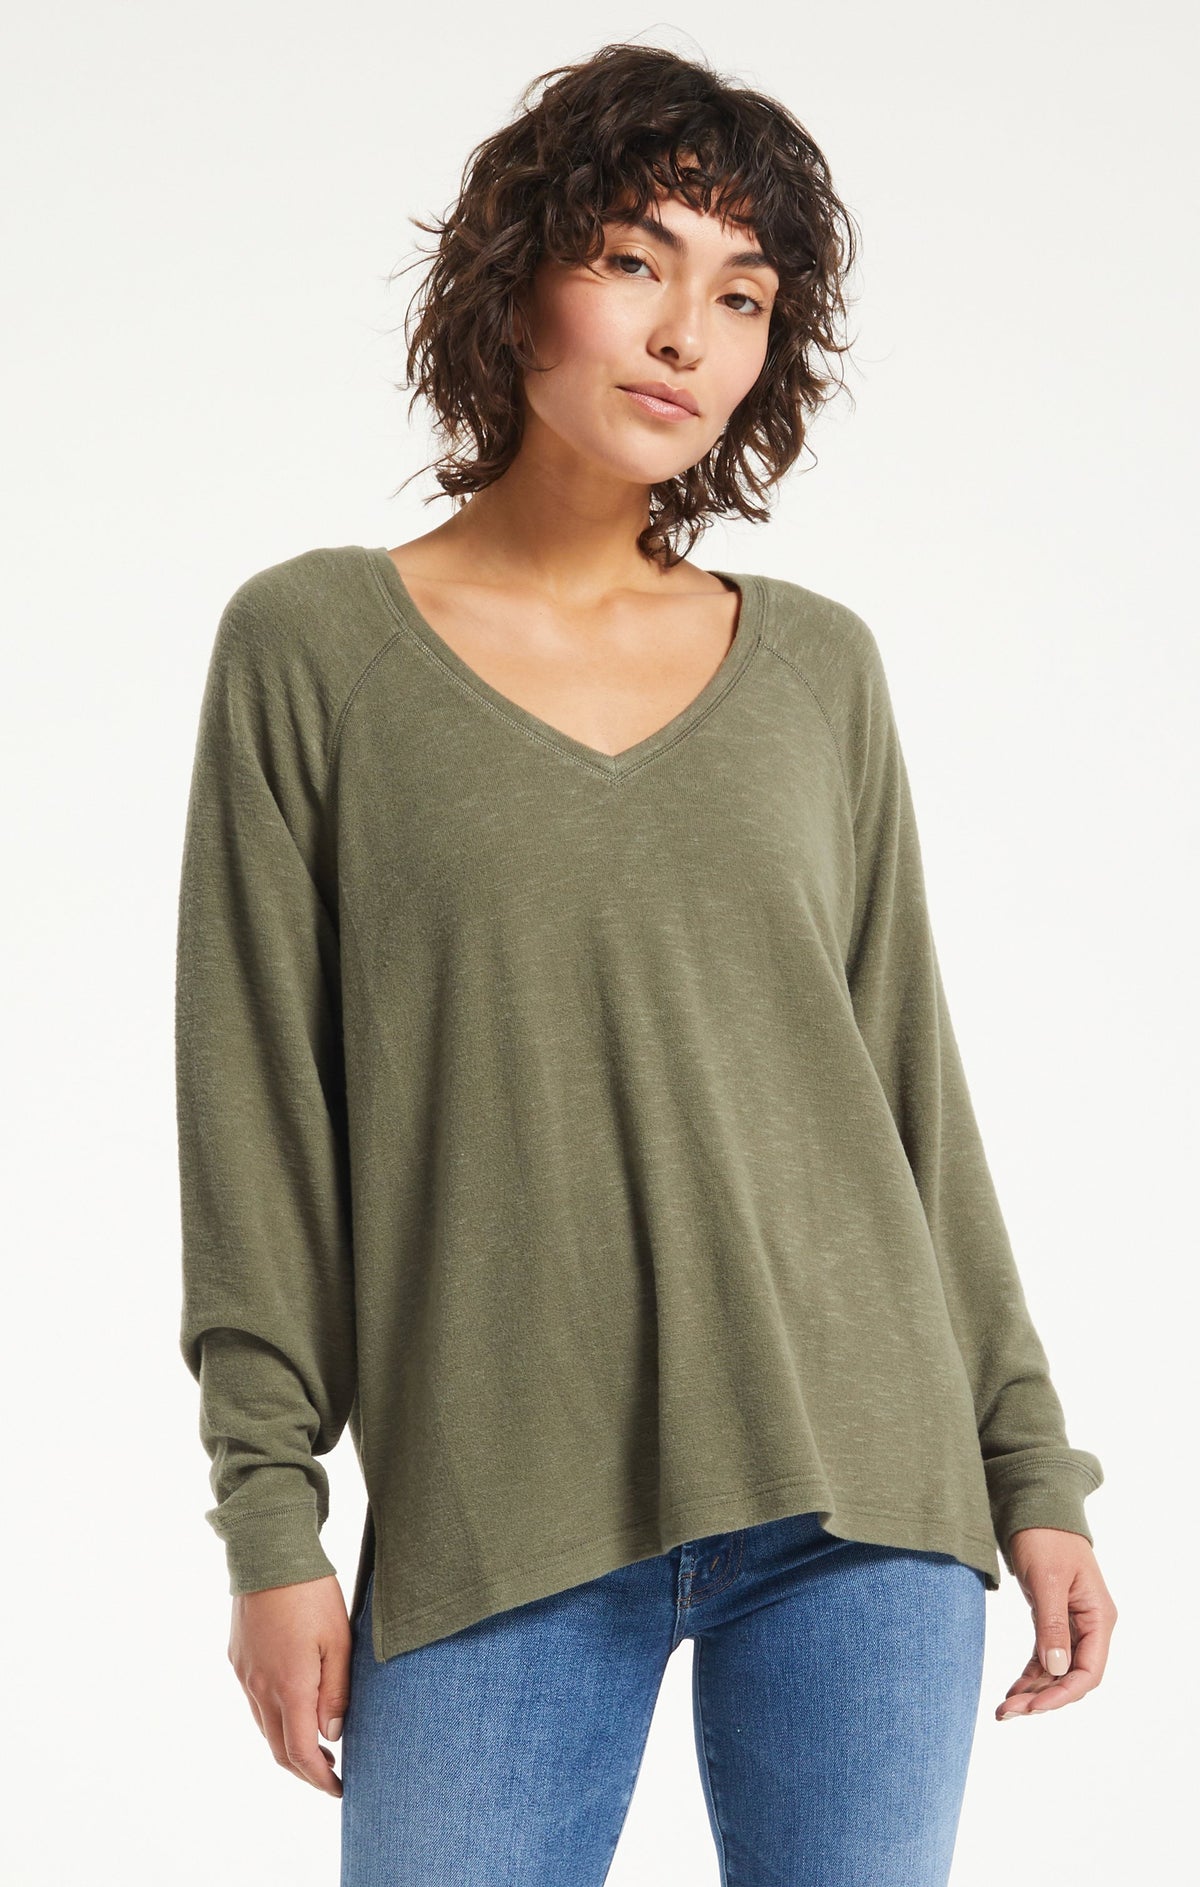 Lyndell Brushed Slub Knit Sweater Top | Charcoal, Sandstone, Dusty Olive